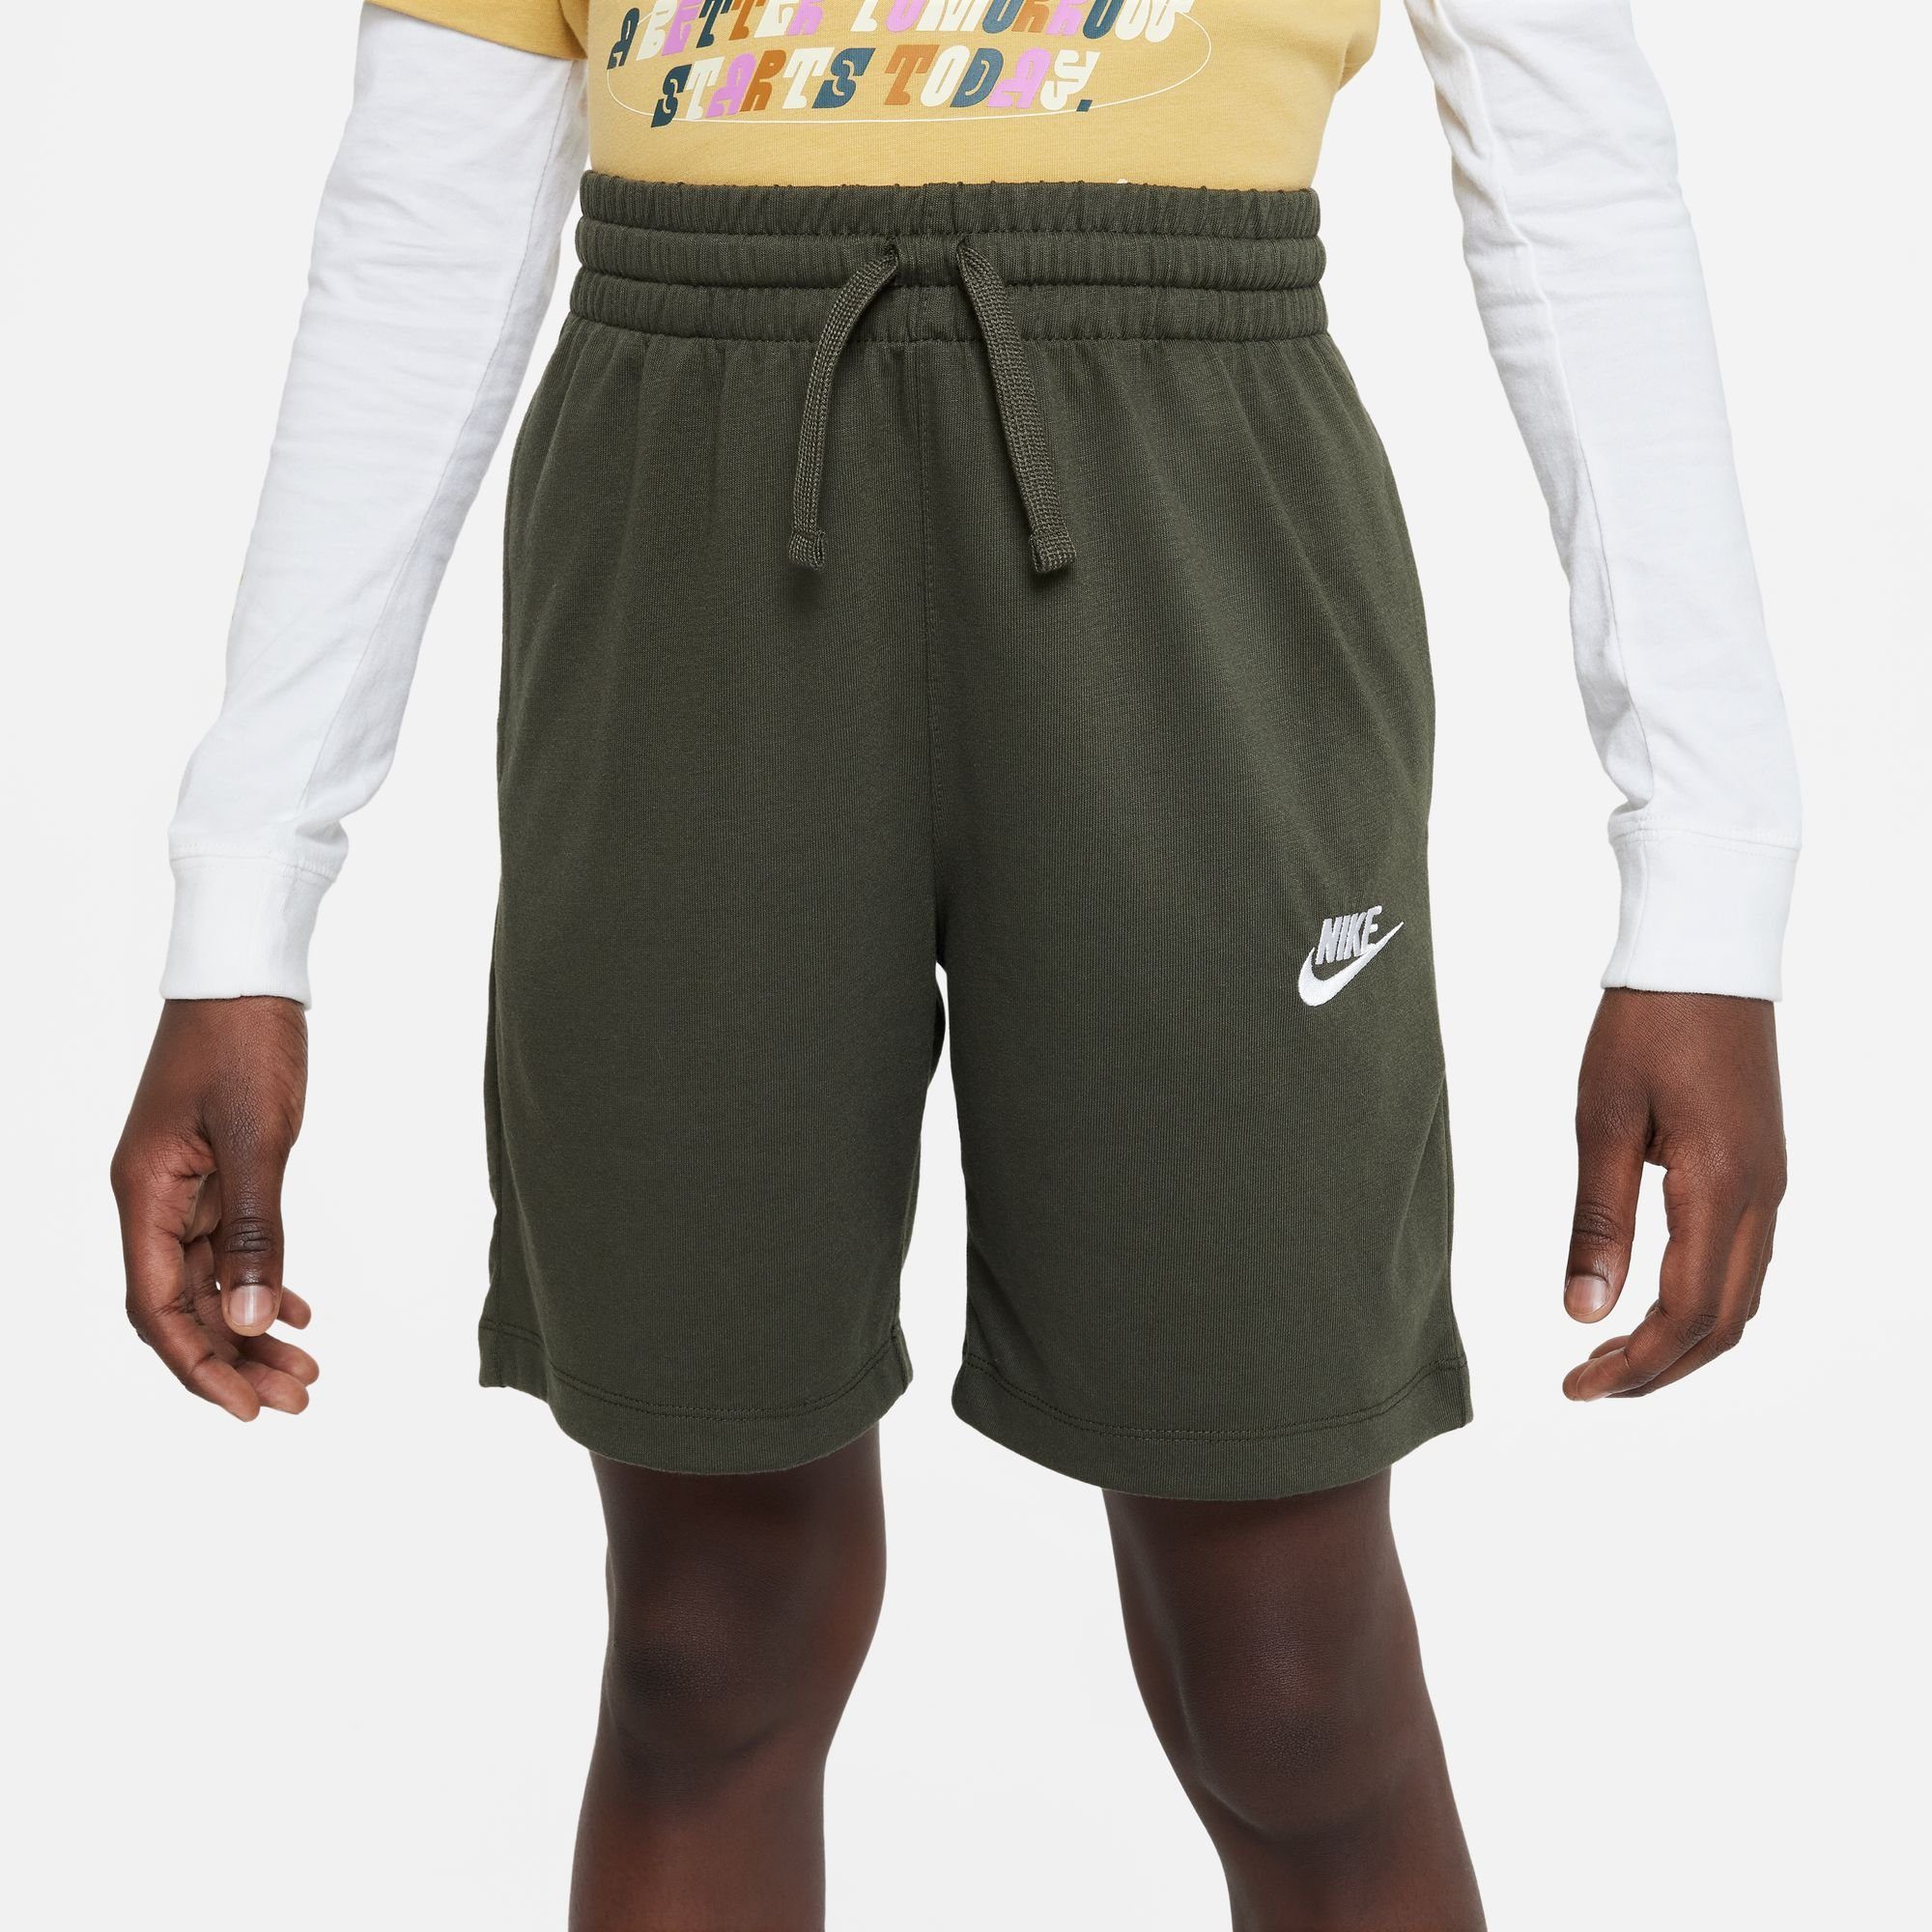 BIG Nike Shorts CARGO KHAKI/WHITE Sportswear (BOYS) KIDS' JERSEY SHORTS